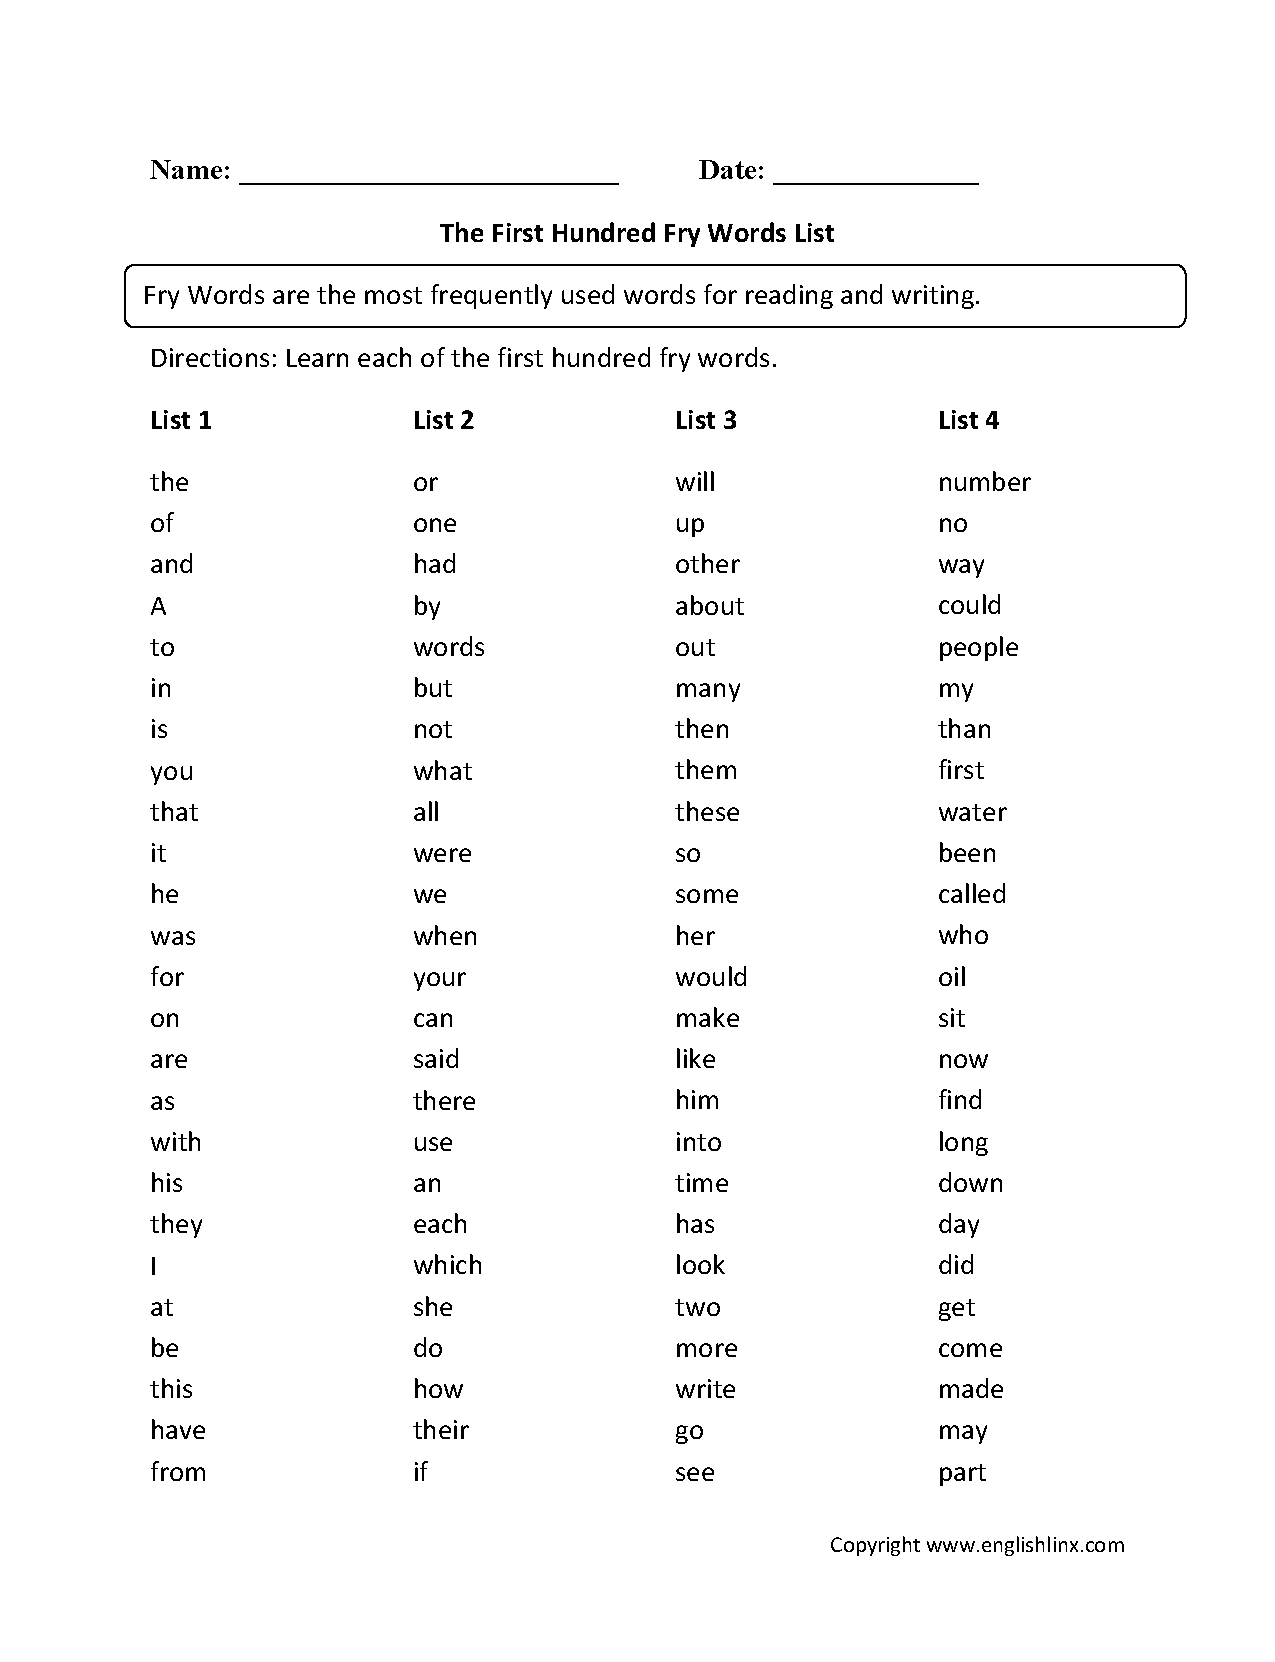 First Hundred Fry Words List Worksheets